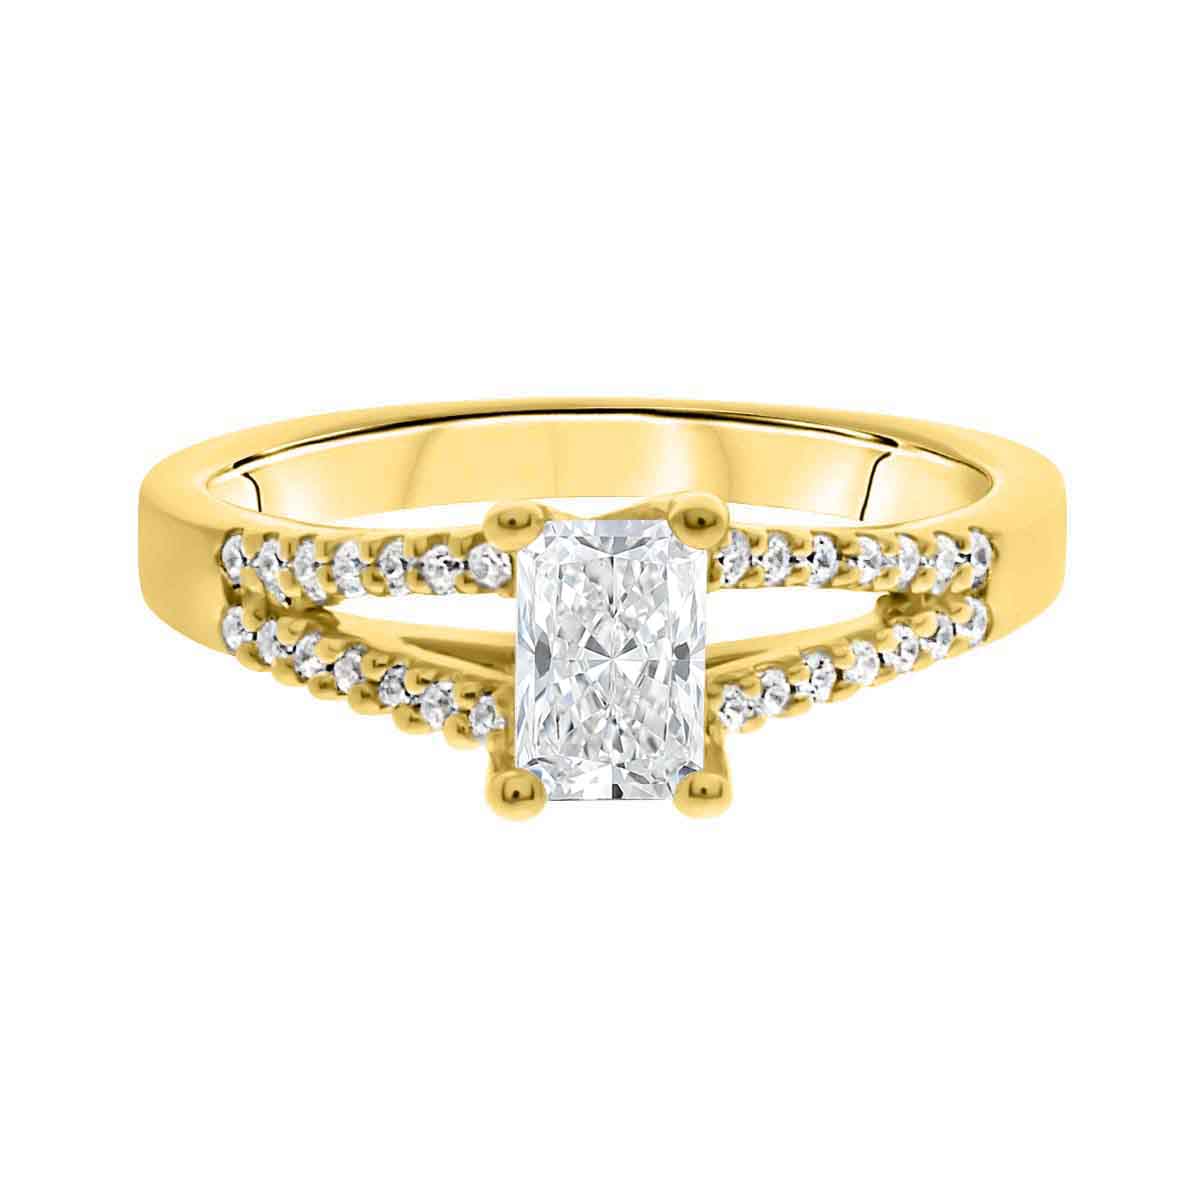 Radiant Cut Diamond Ring in yellow gold